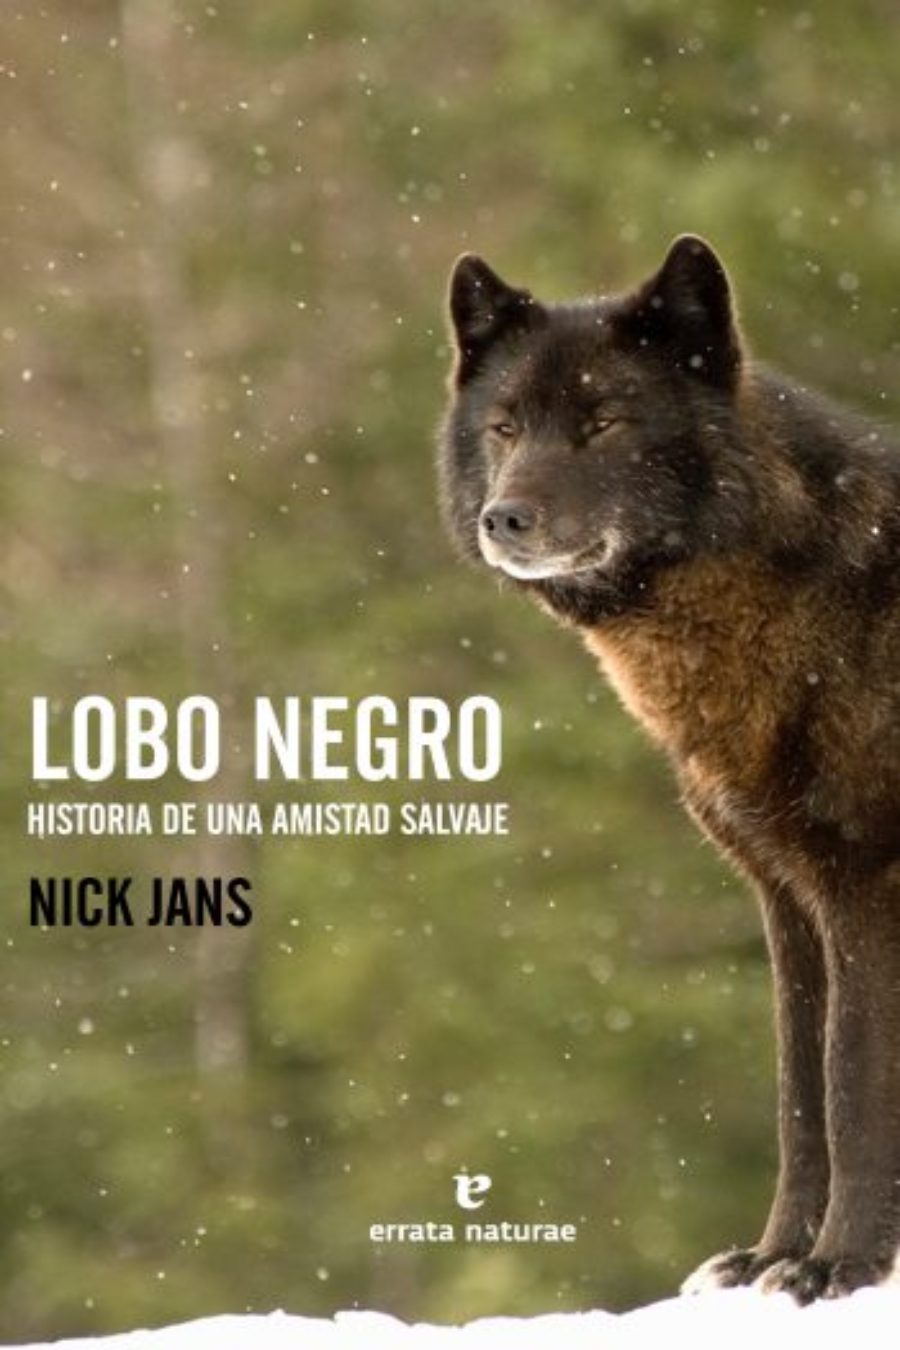 Lobo Negro. Nick Jans. Errata Naturae.